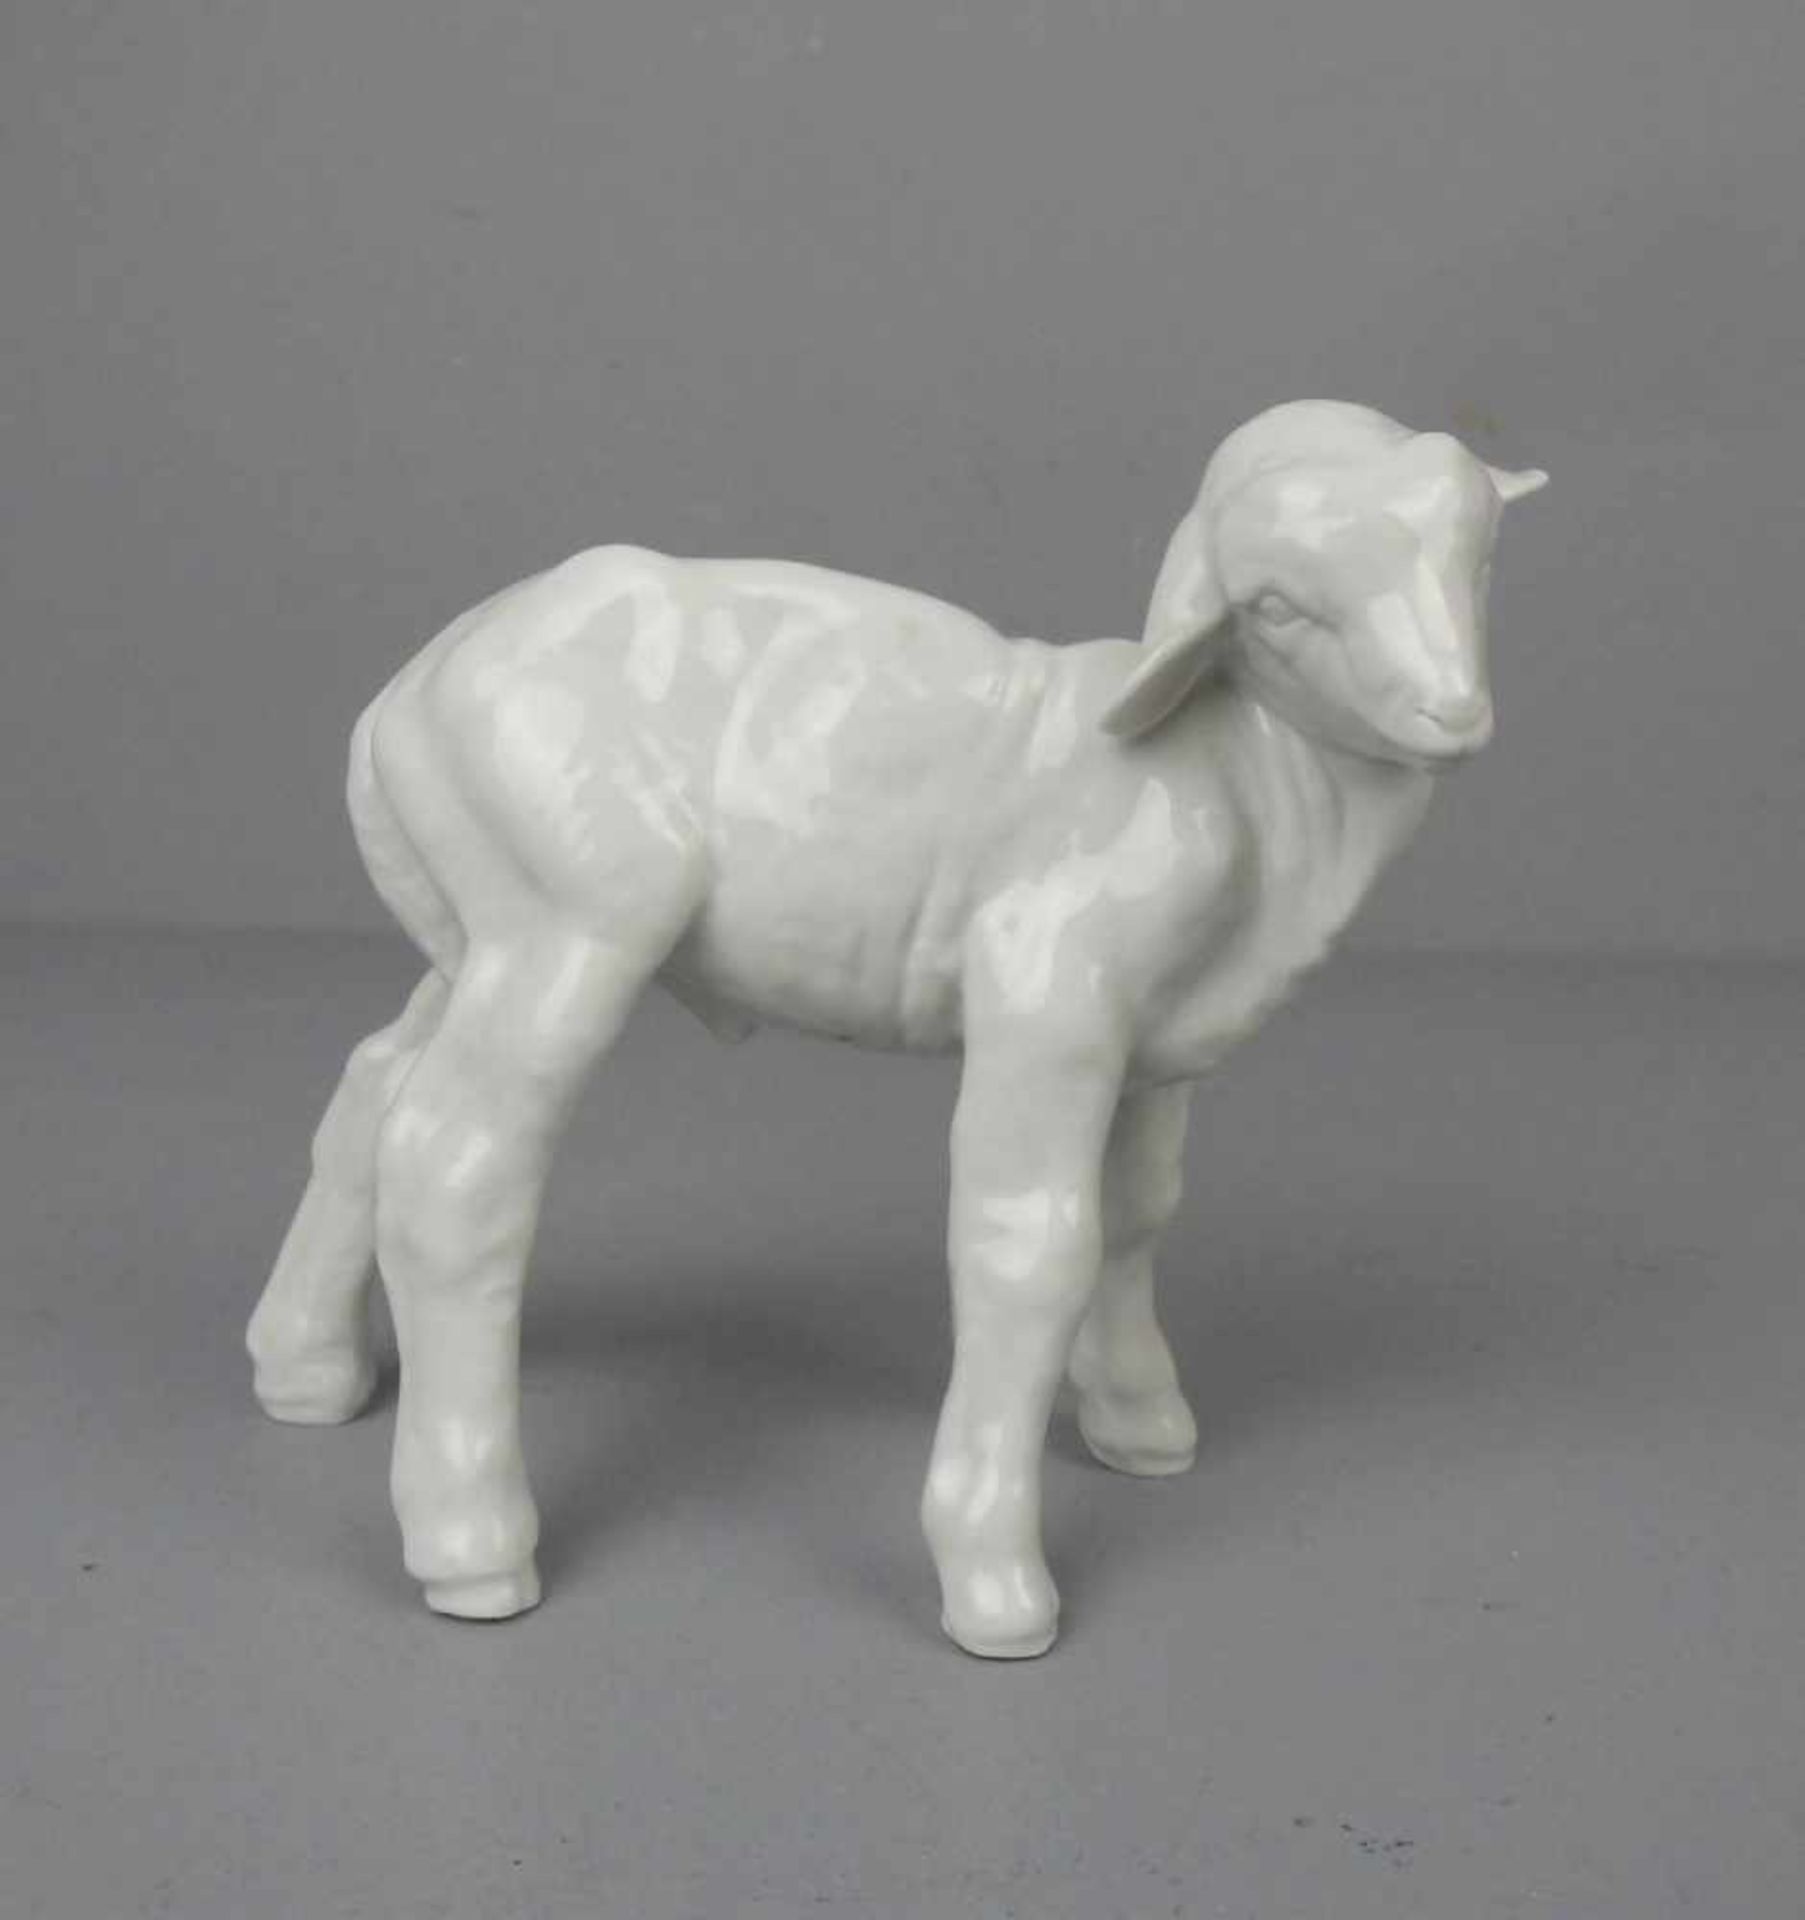 PORZELLANFIGUR / porcelain figure: "Lamm", Weissporzellan, Manufaktur Meissen, unterglasurblaue